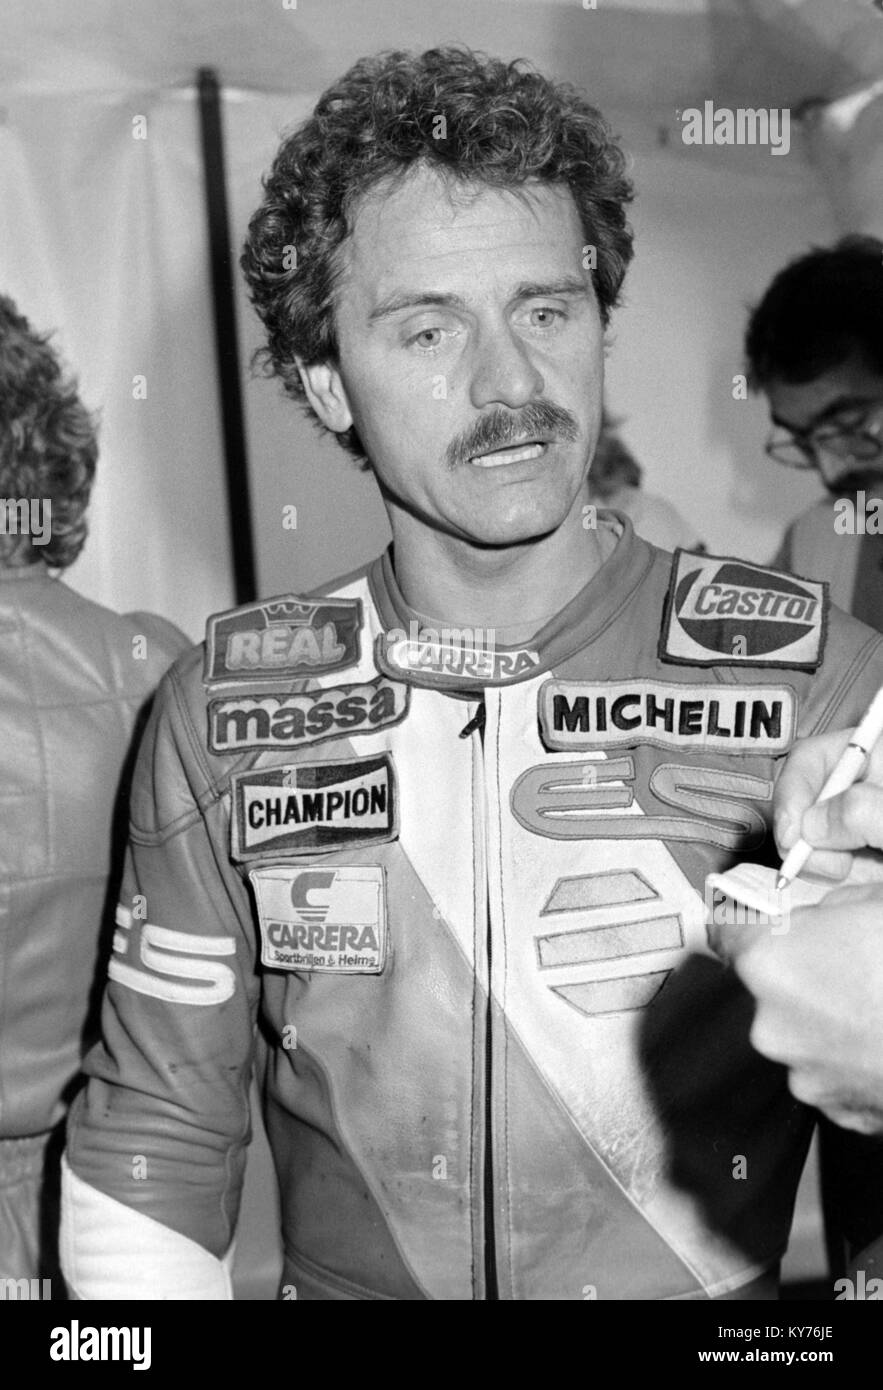 Manfred Herweh at the 1985 British motorcycle Grand Prix Moto GP Stock  Photo - Alamy